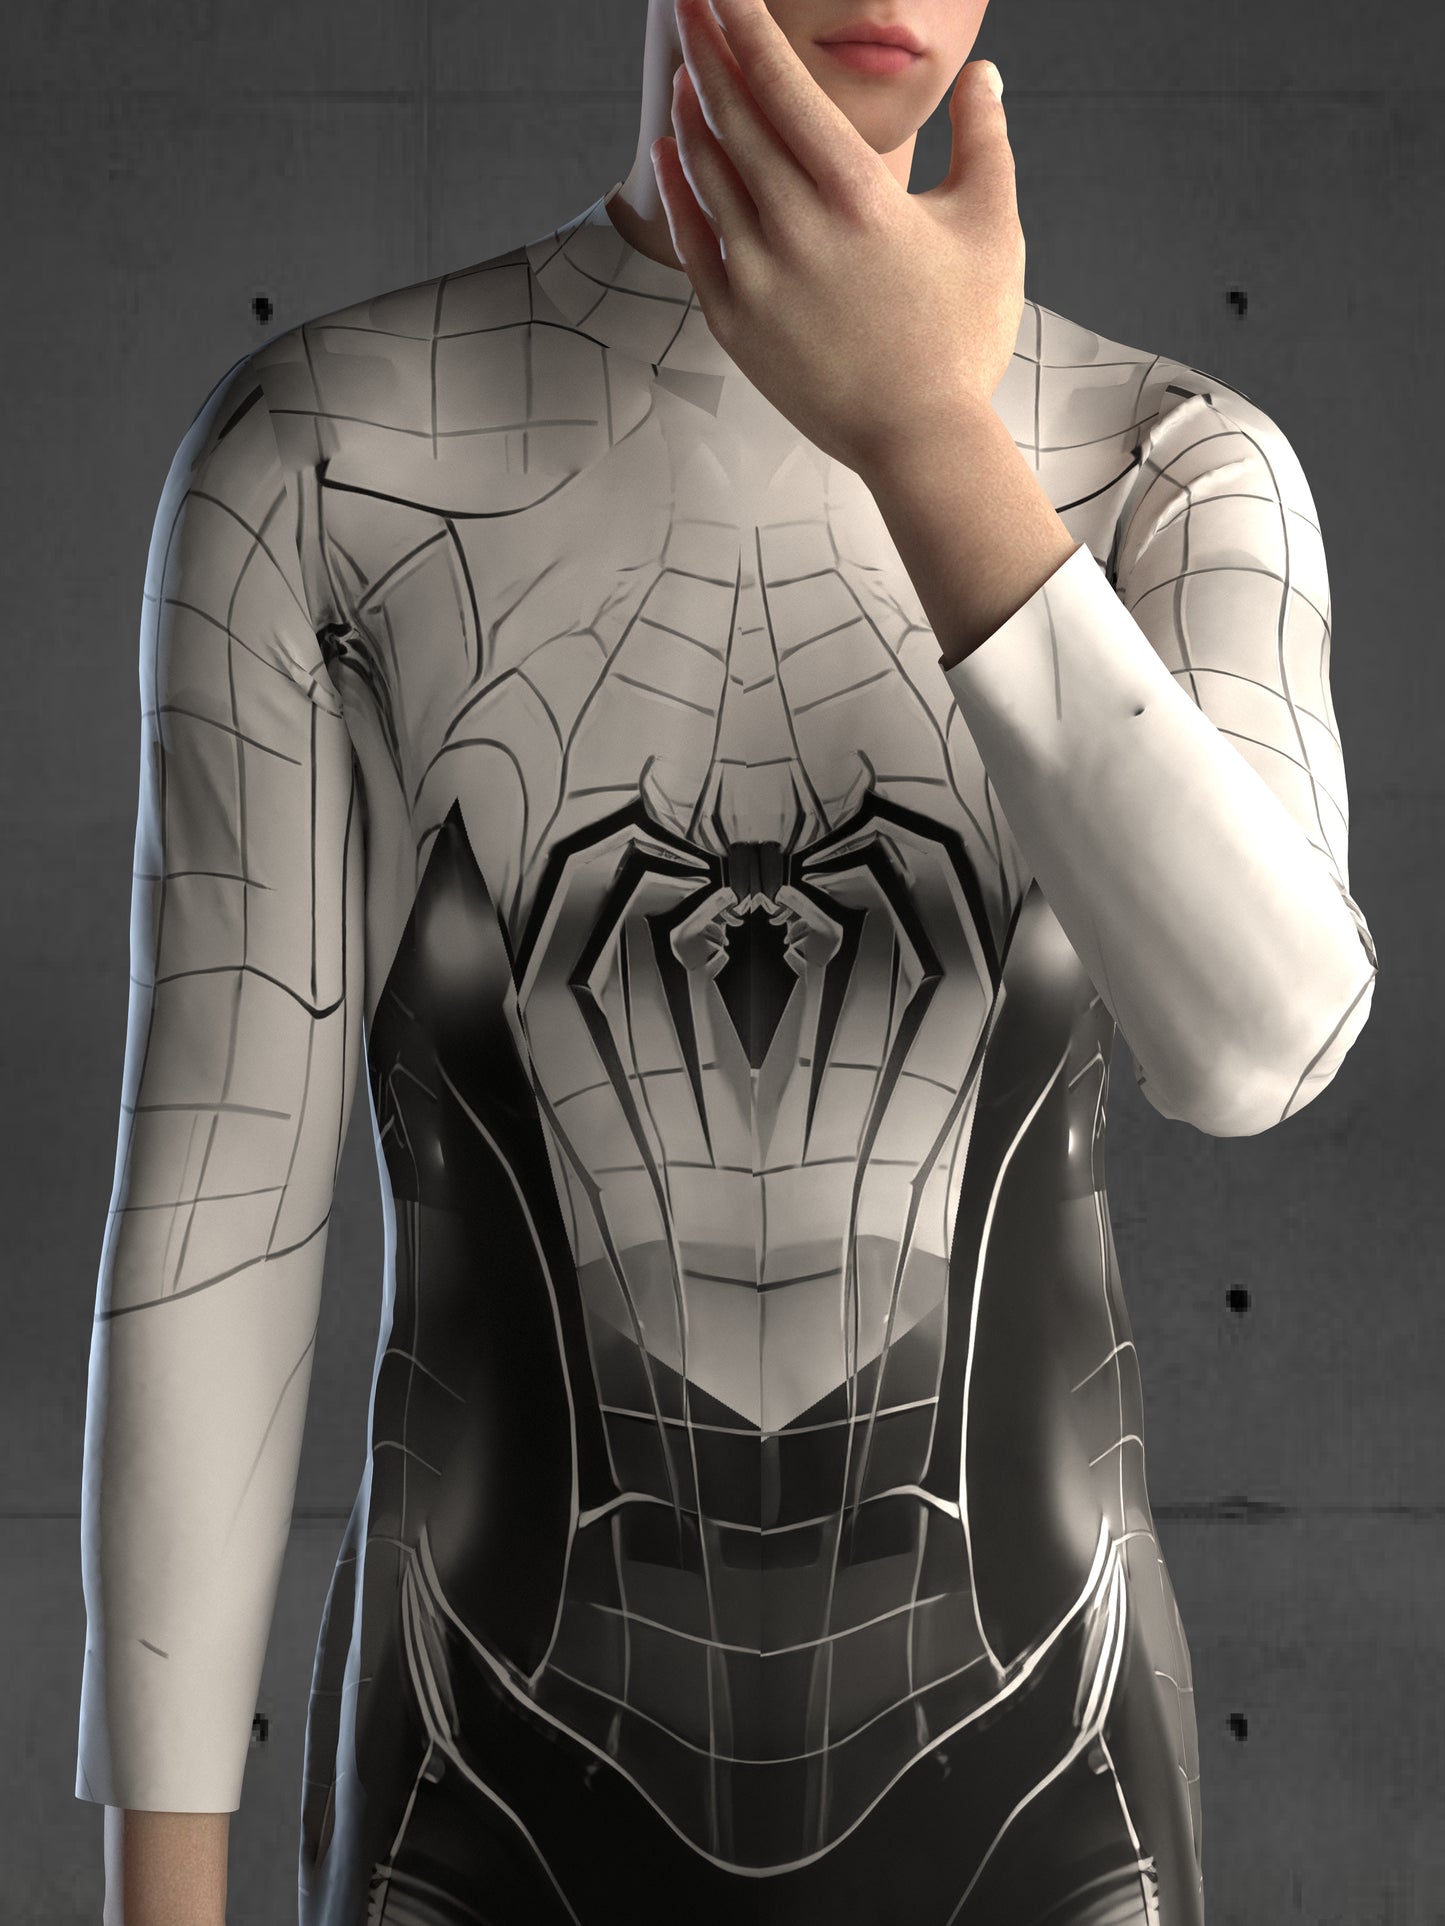 A67M Spider Universe Costume for Men, Black, Custom Fit Available, Futuristic Superhero Cosplay, Halloween Costume